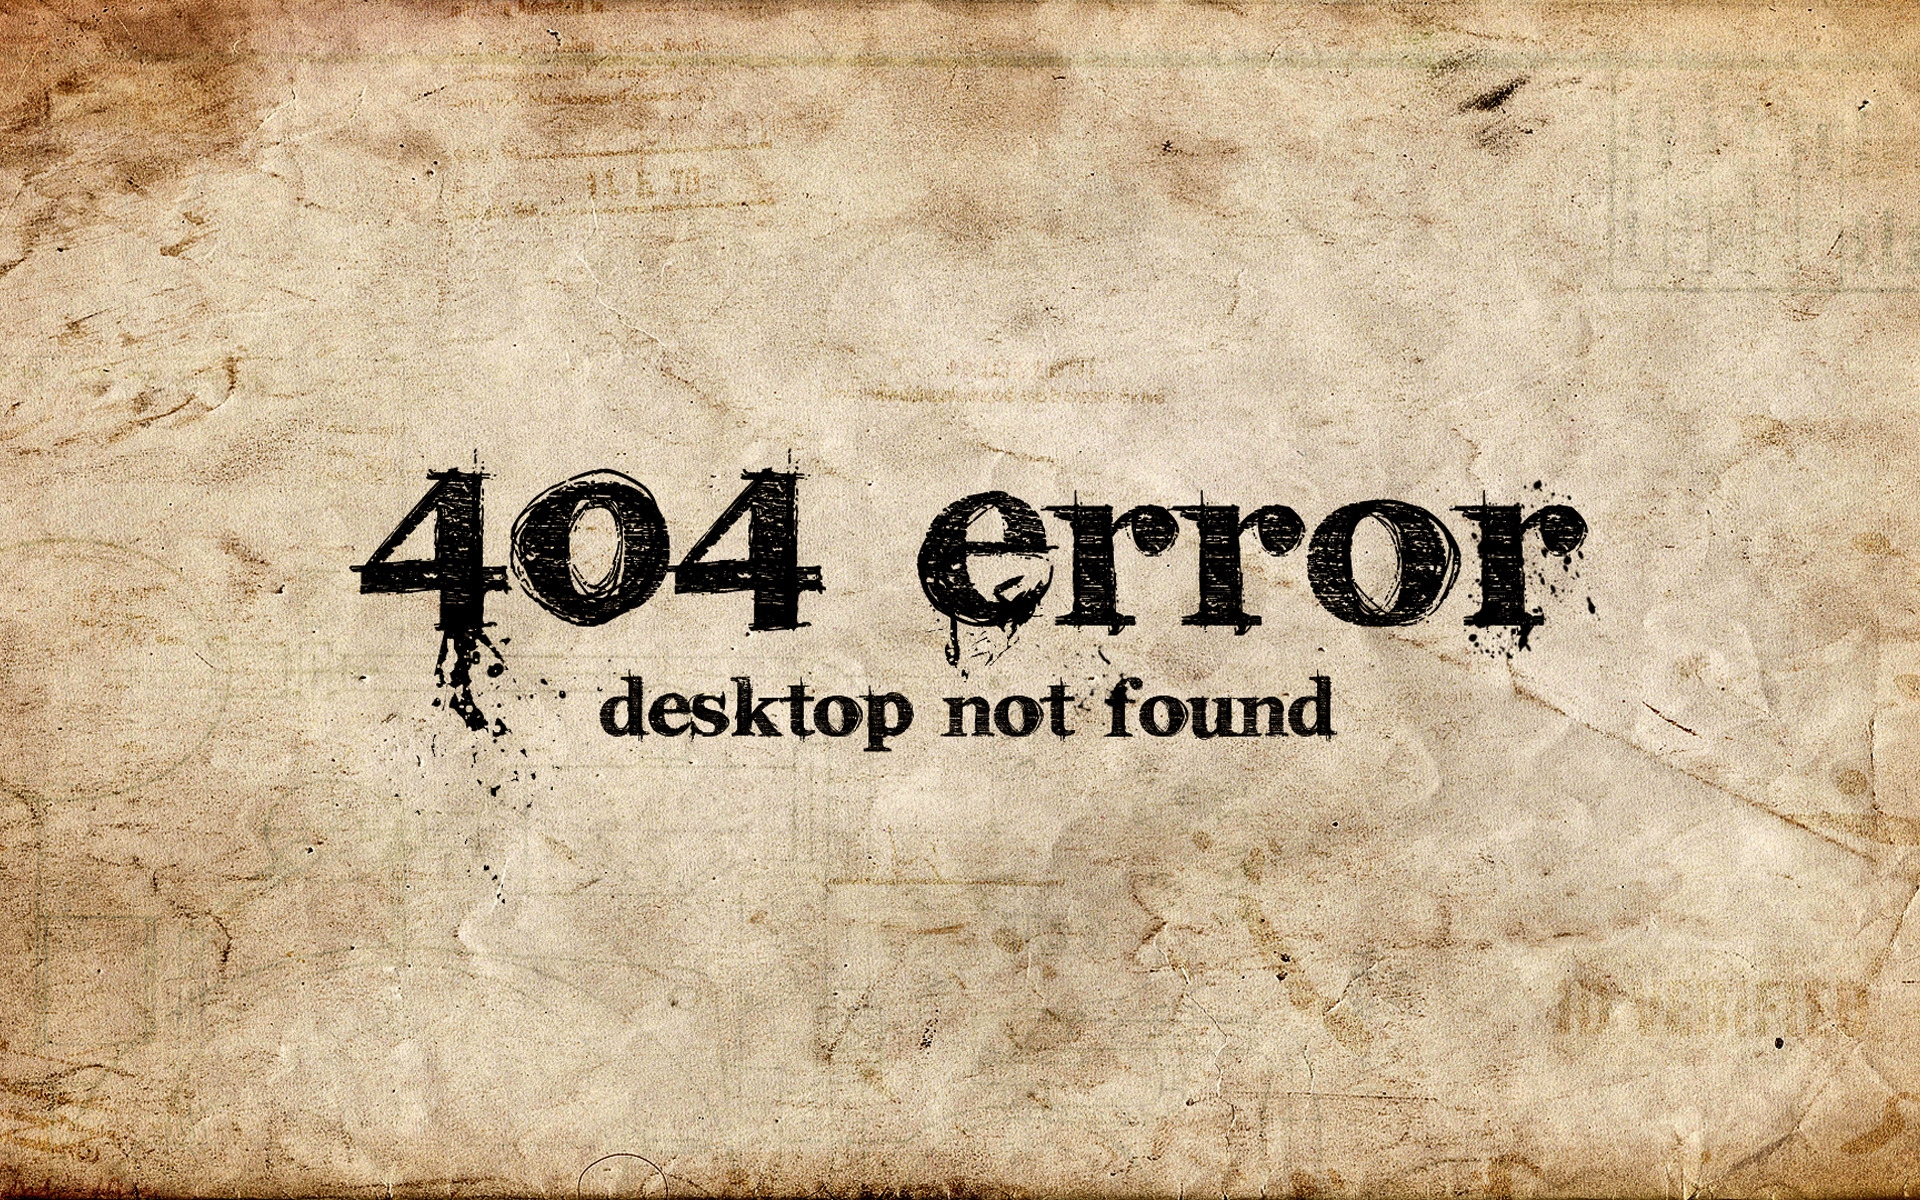 Error 404 for 1920 x 1200 widescreen resolution